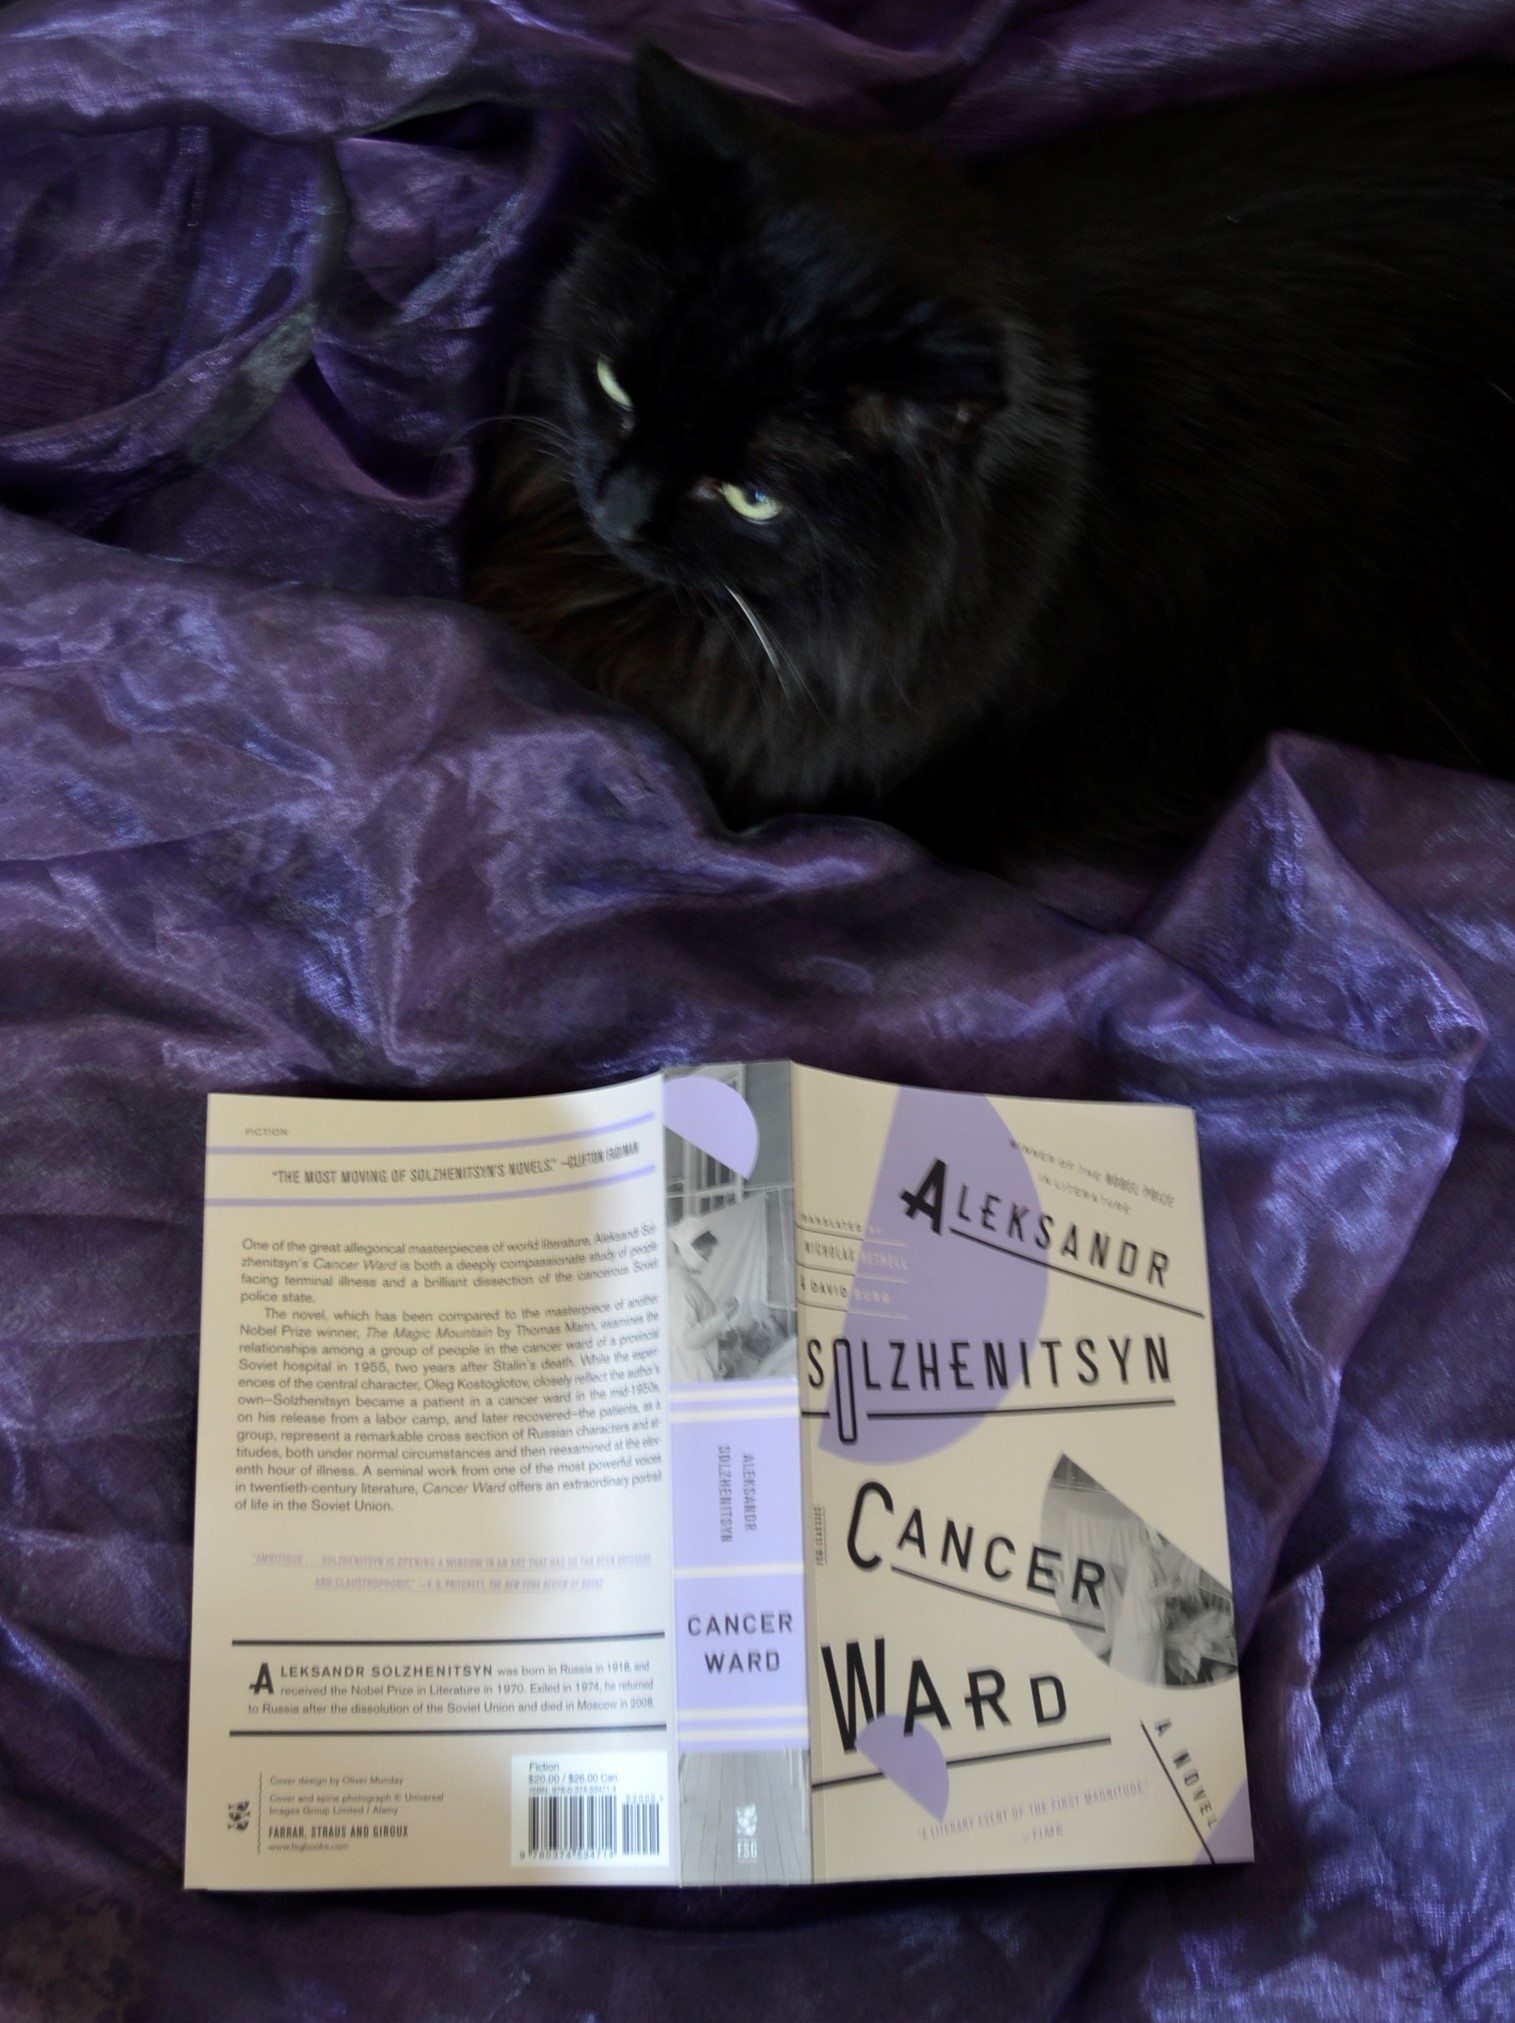 A black cat lies in purple organza beside Solzhenitsyn's Cancer Ward.